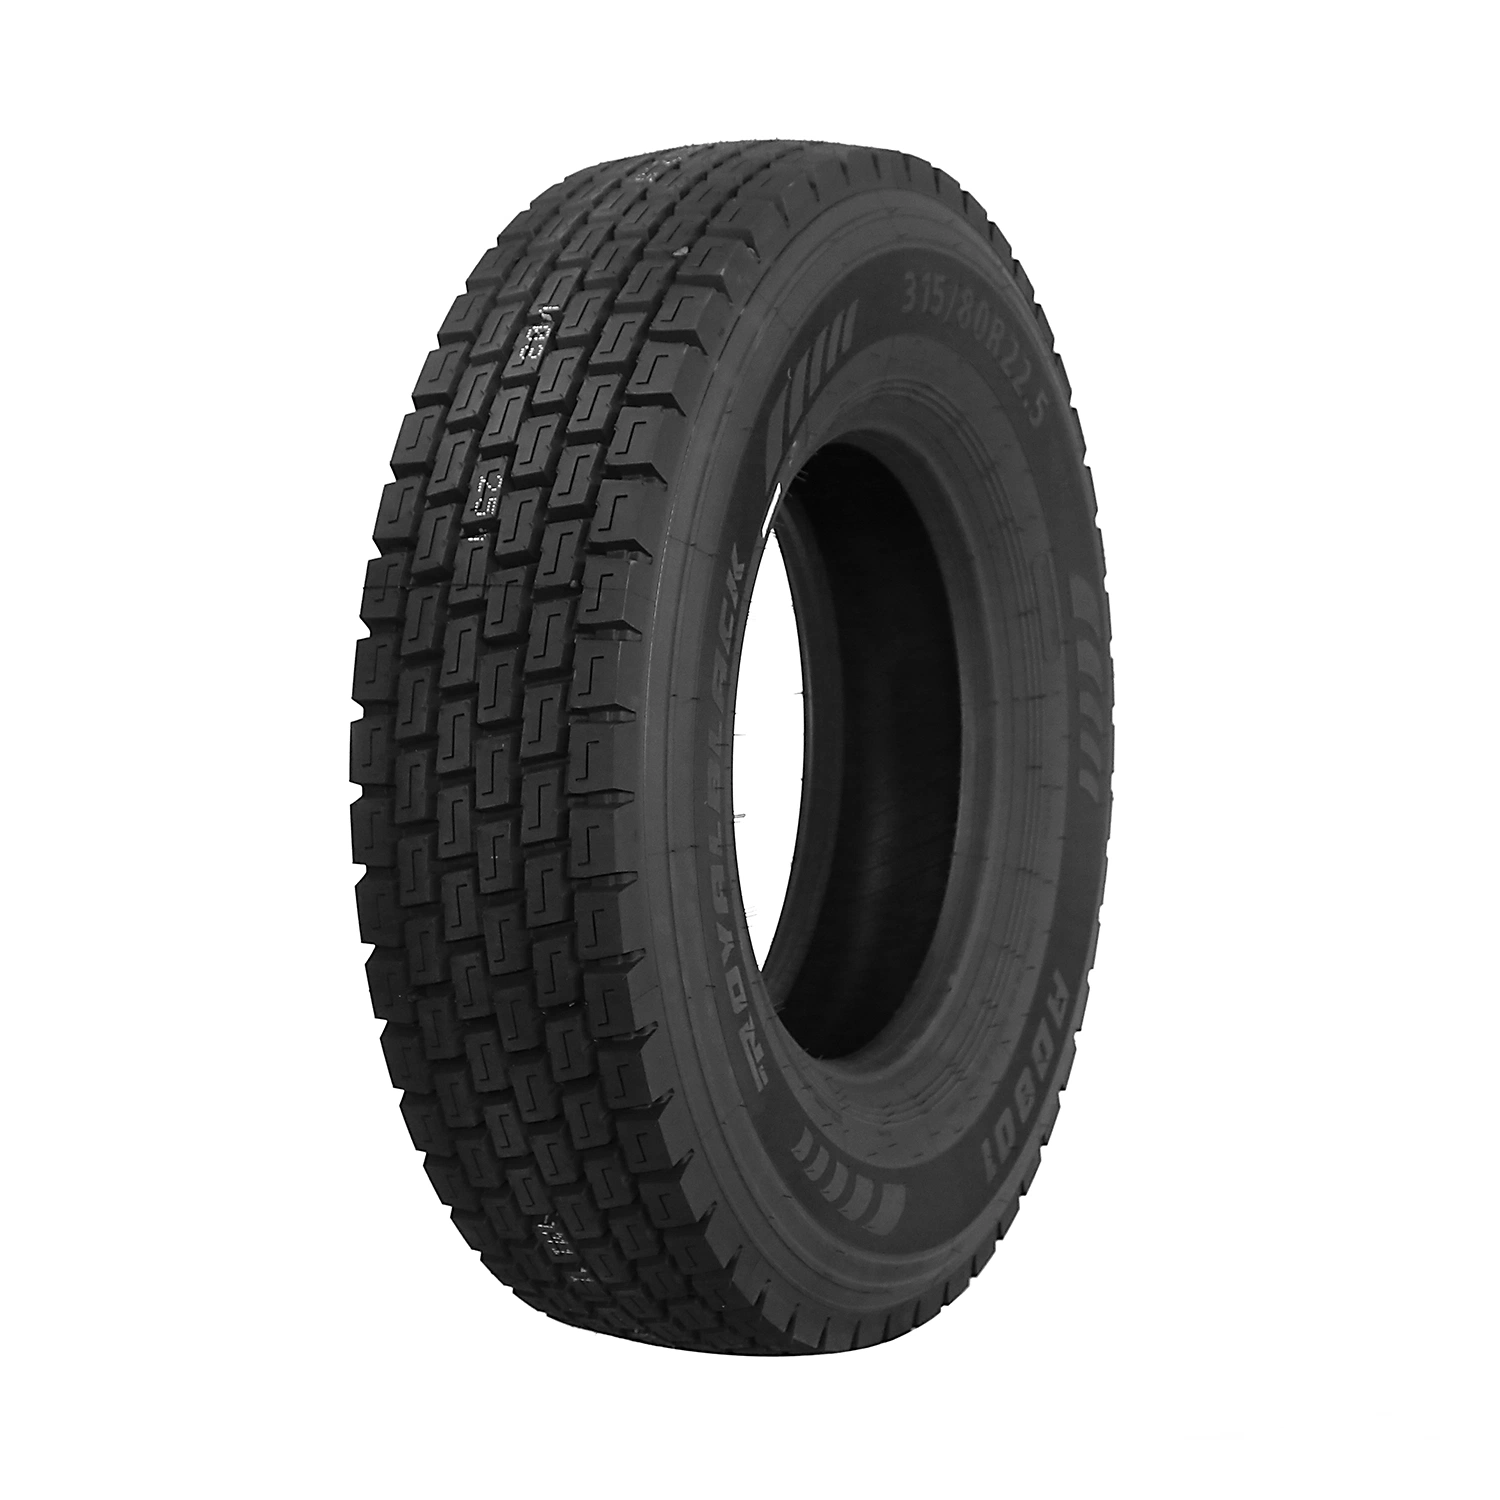 Wholesale All Steel Radial Tubeless Rubber Heavy Duty Truck Bus TBR Trailer Tyre Tire 315/80r22.5 11r22.5 12r22.5 385/65r22.5 13r22.5 1100r20